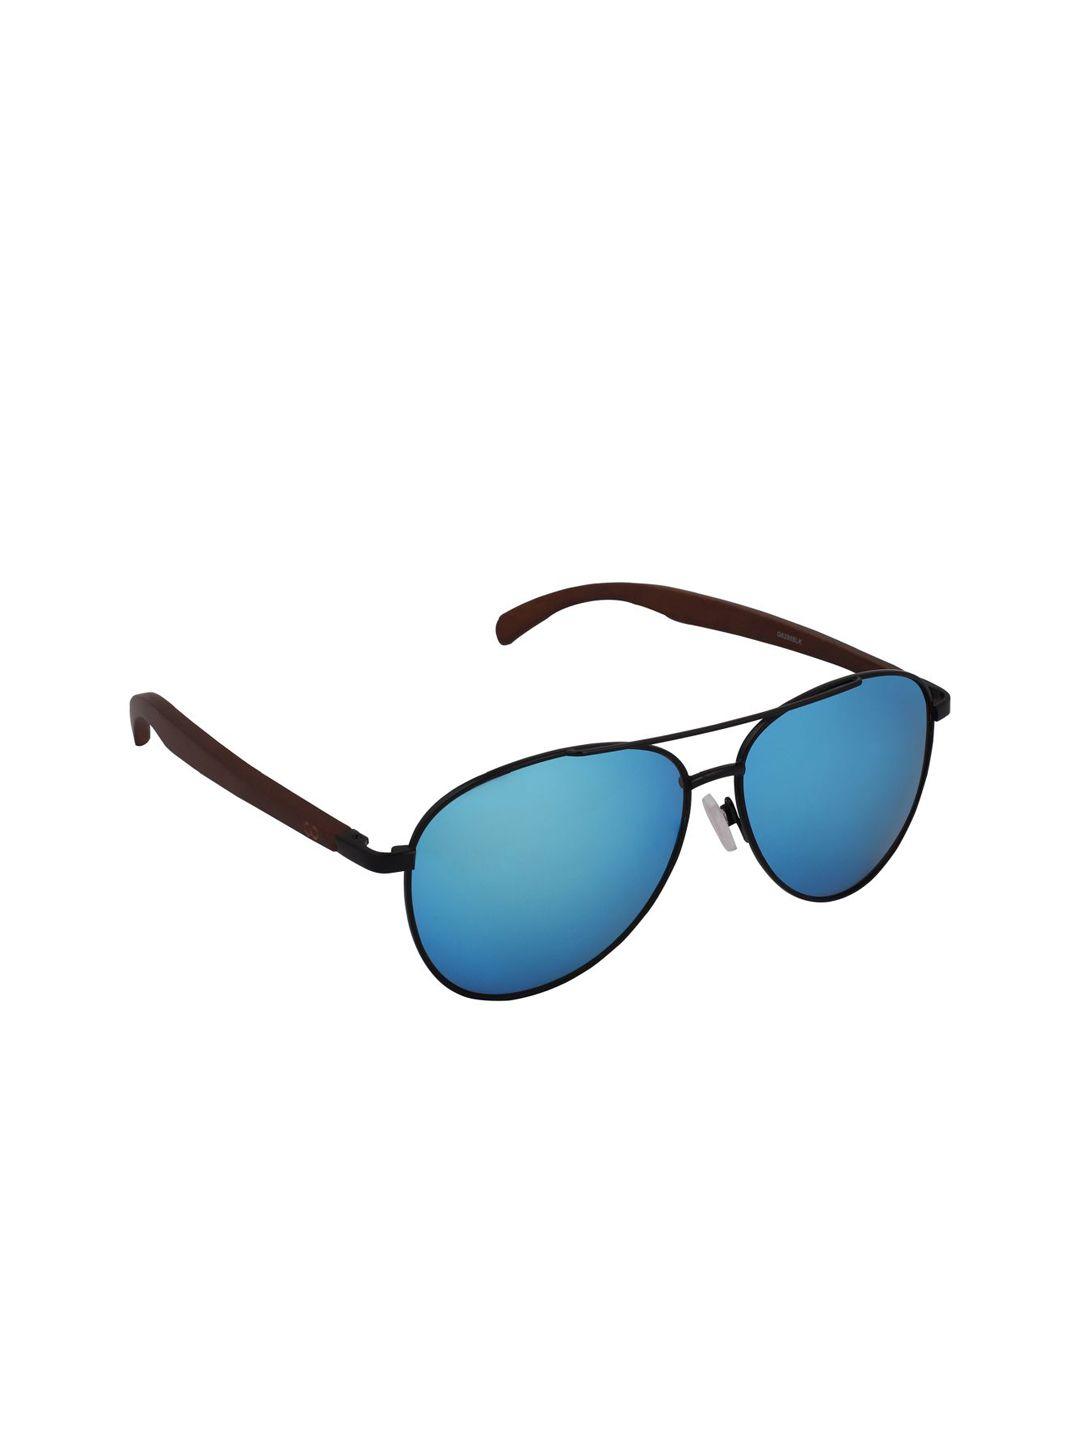 gio collection unisex aviator sunglasses g6266blk